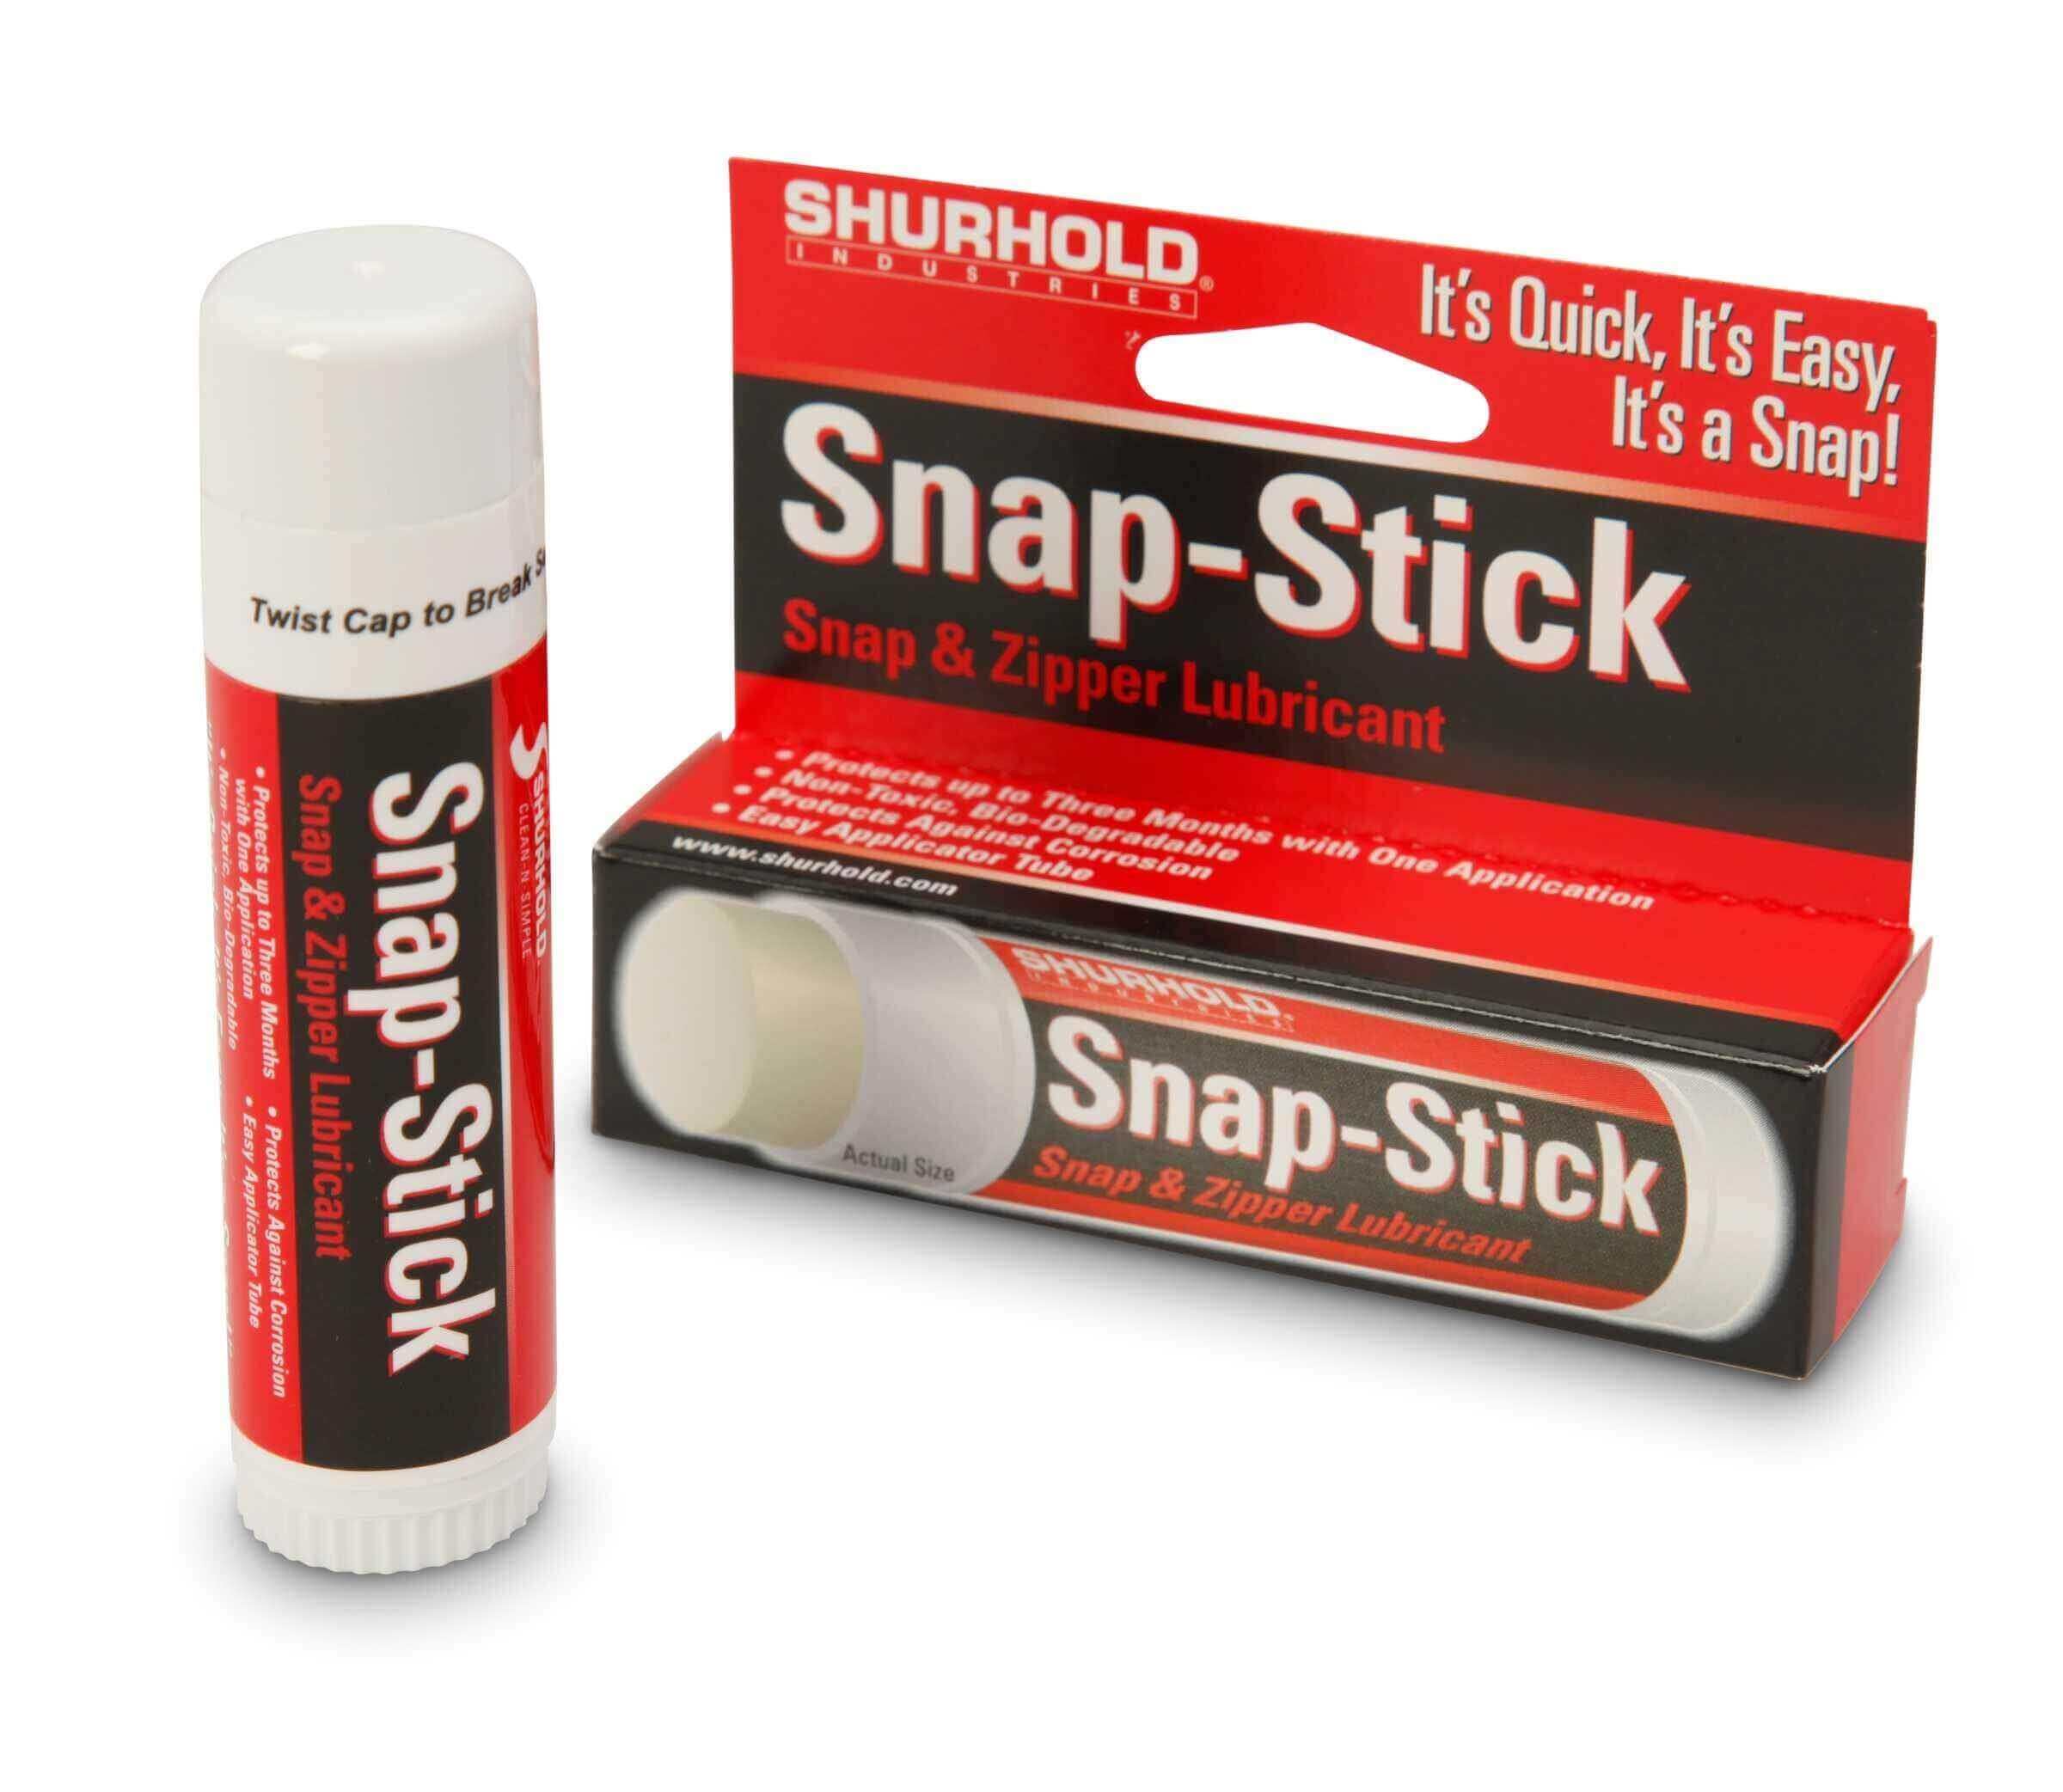 Snap-Stick ® Snap & Zipper Lubricant SH251 - Boat Building Repairs &...